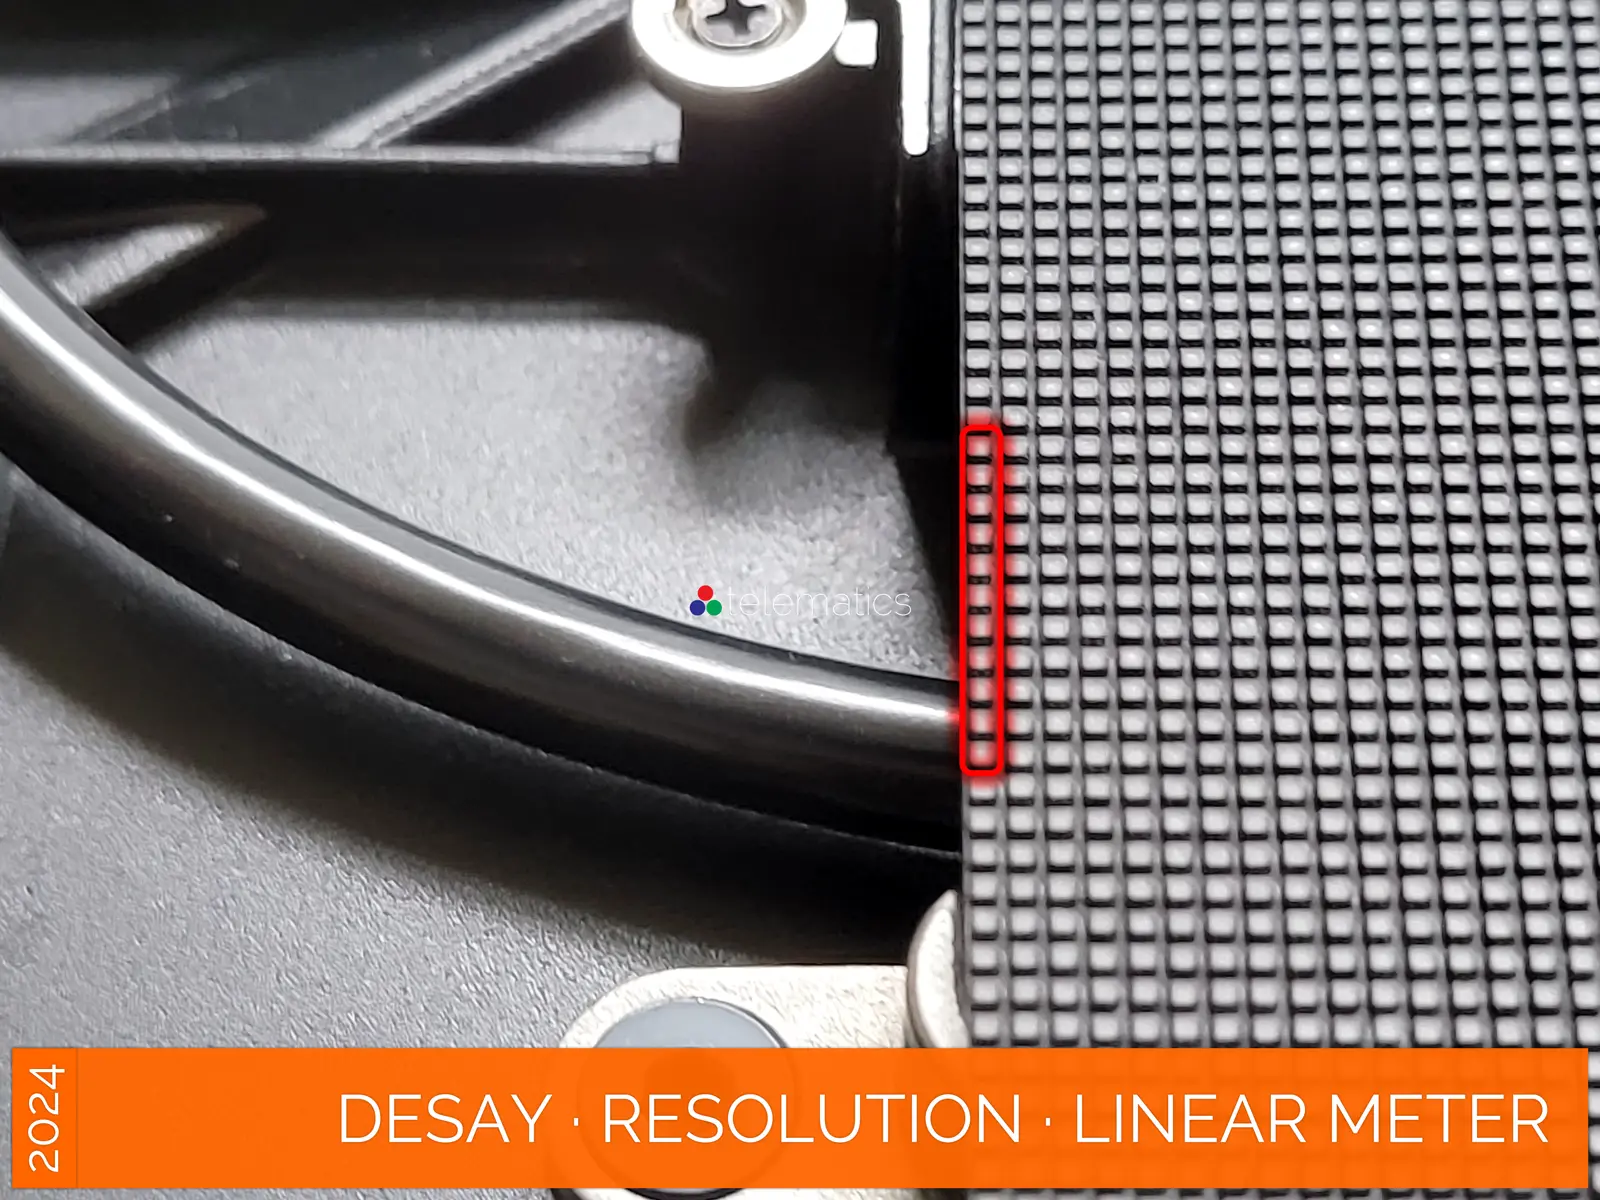 Desay · Series · Direct View LED Display Panel · Full Pixel Range · Resolution · Pixels · Linear Meter · NovaStar COEX MX CX · Vision Management Platform · Viplex · review · price · cost